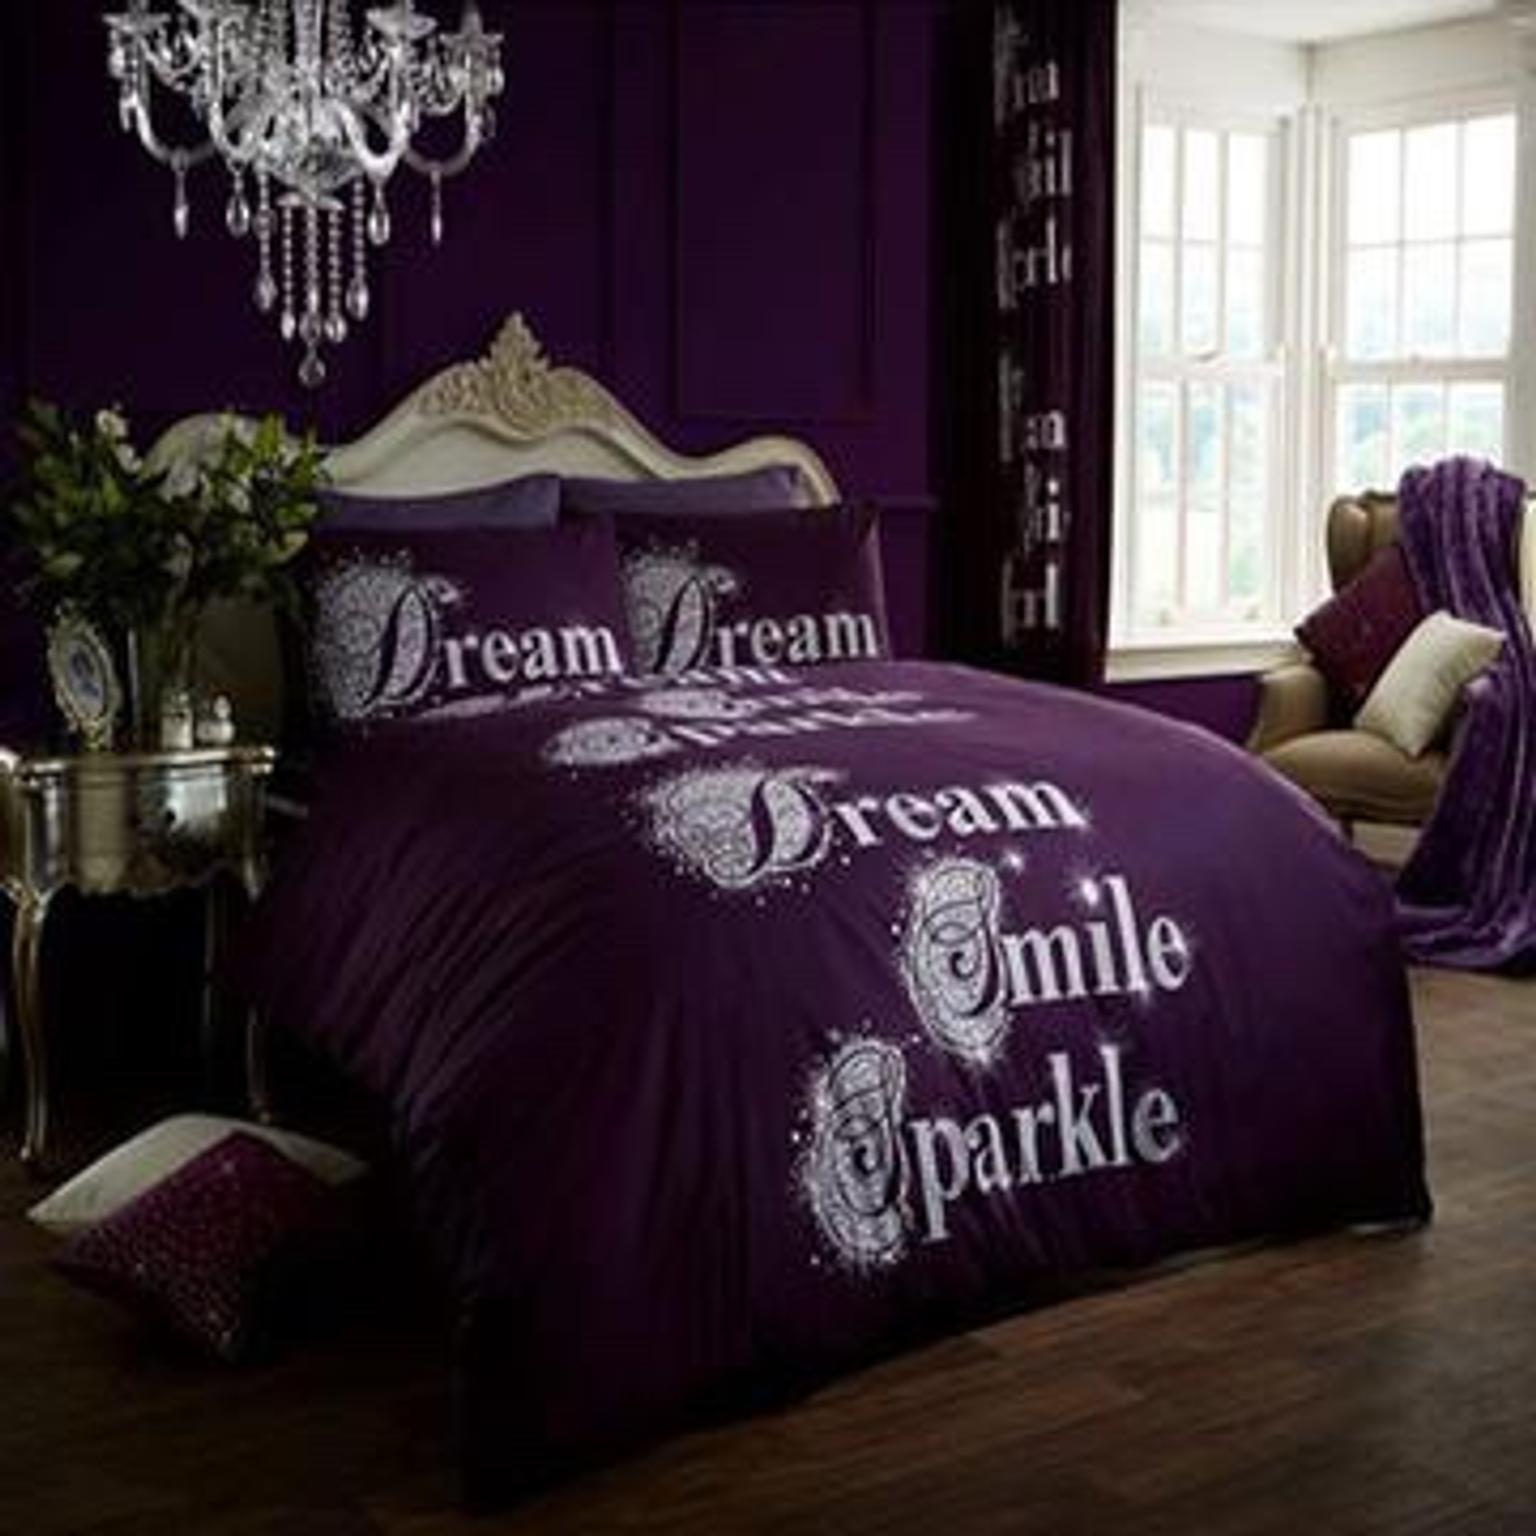 Brand New Dream Duvet Set Black Or Purple In L13 Liverpool For